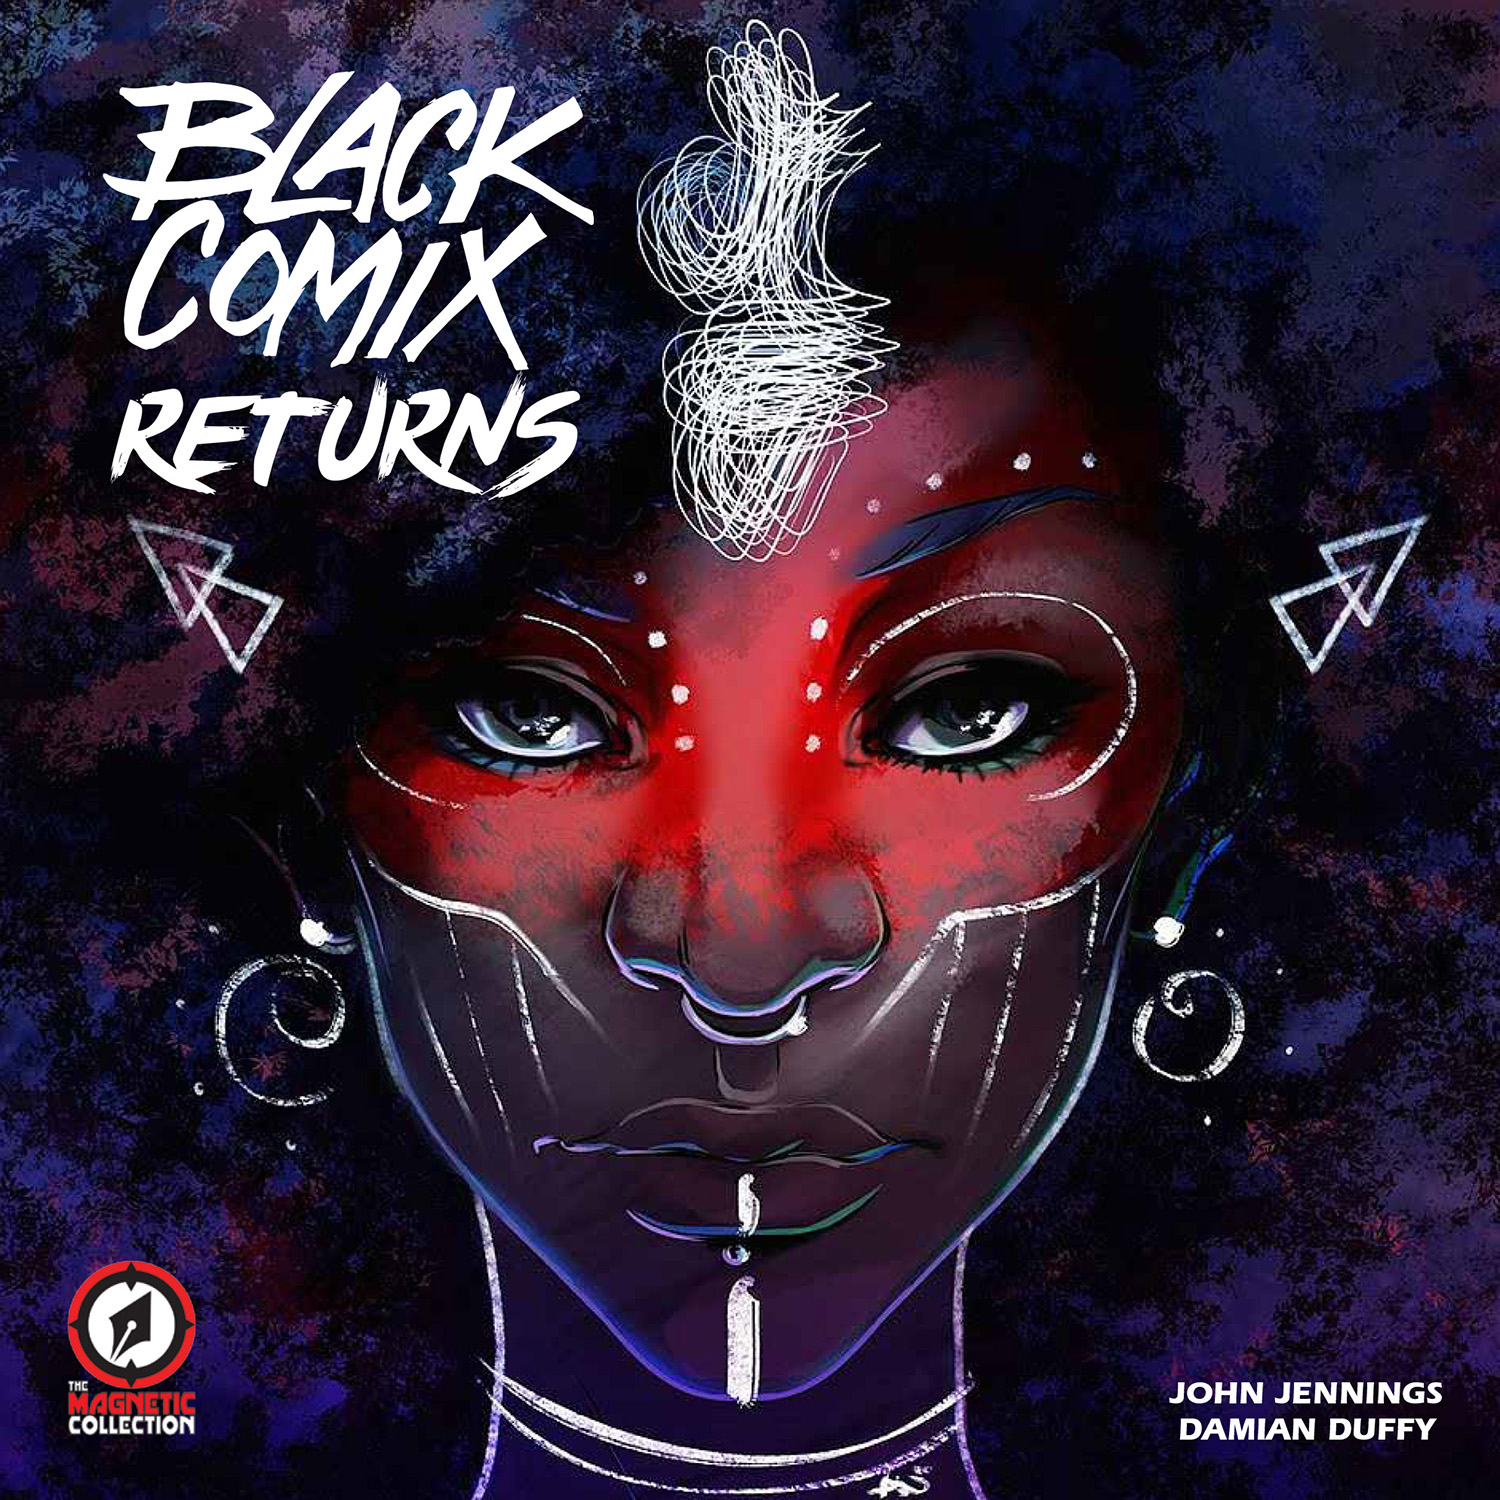 Black Comix Returns Hardcover